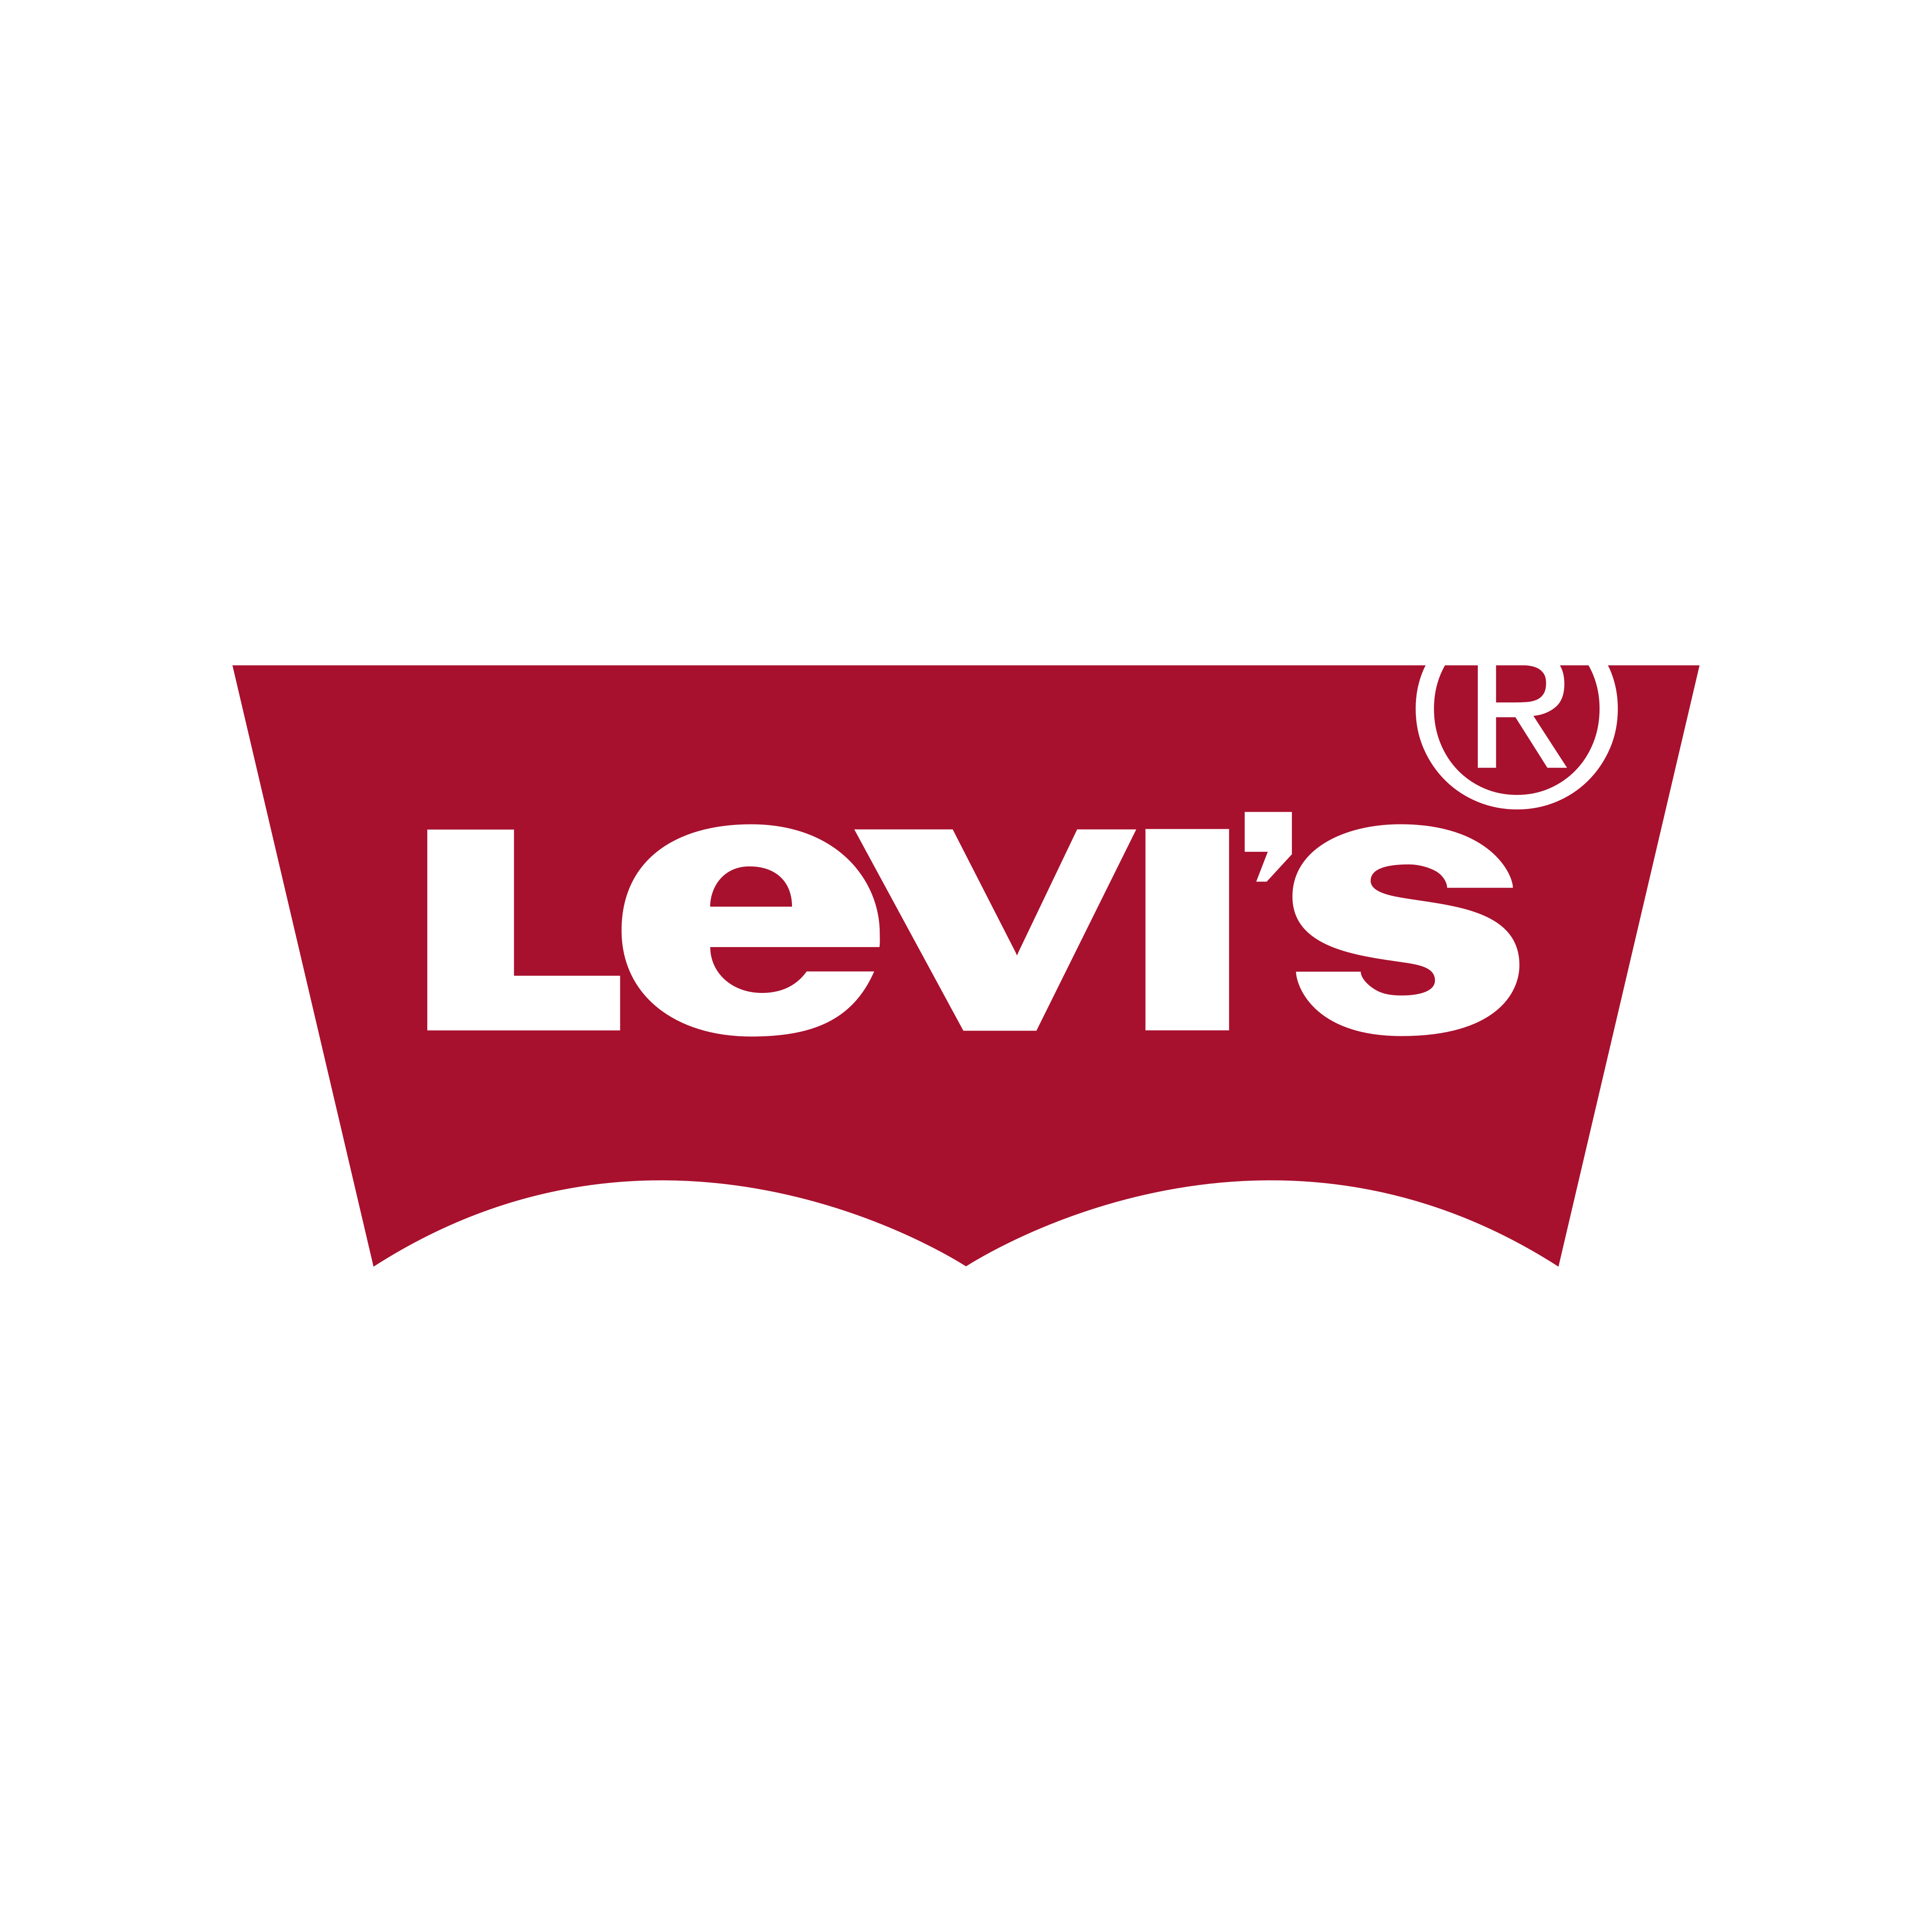 levis logo 0 - Levi's Logo